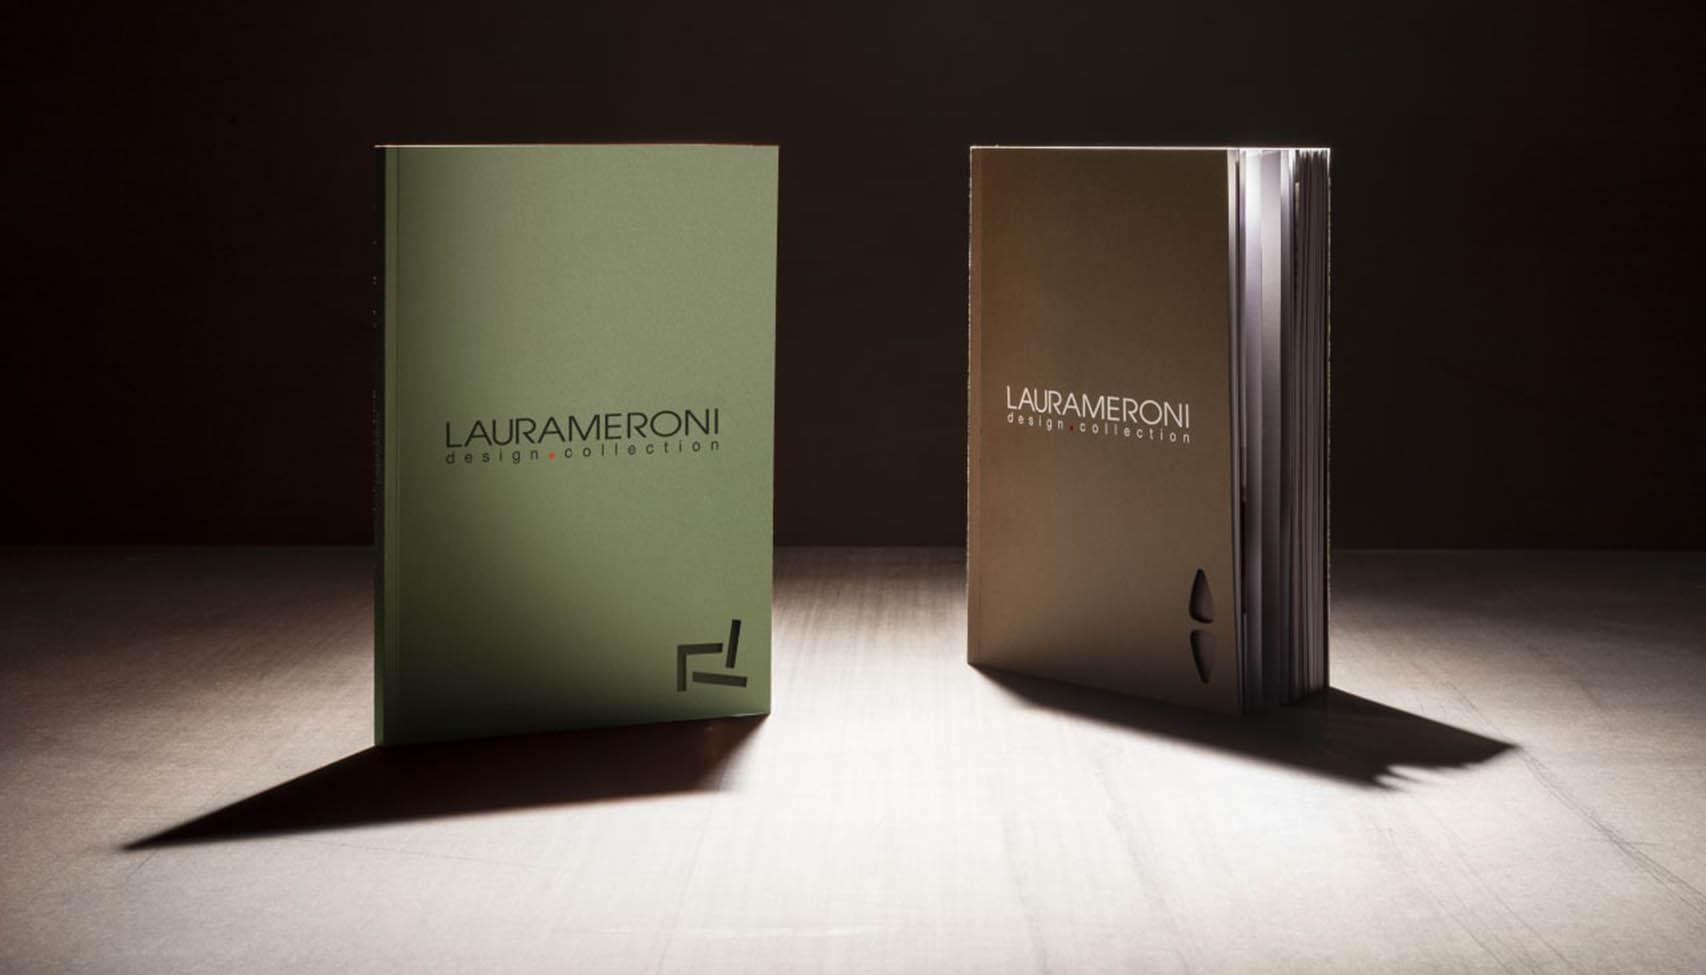 laurameroni luxury interior design furniture catalogue free download